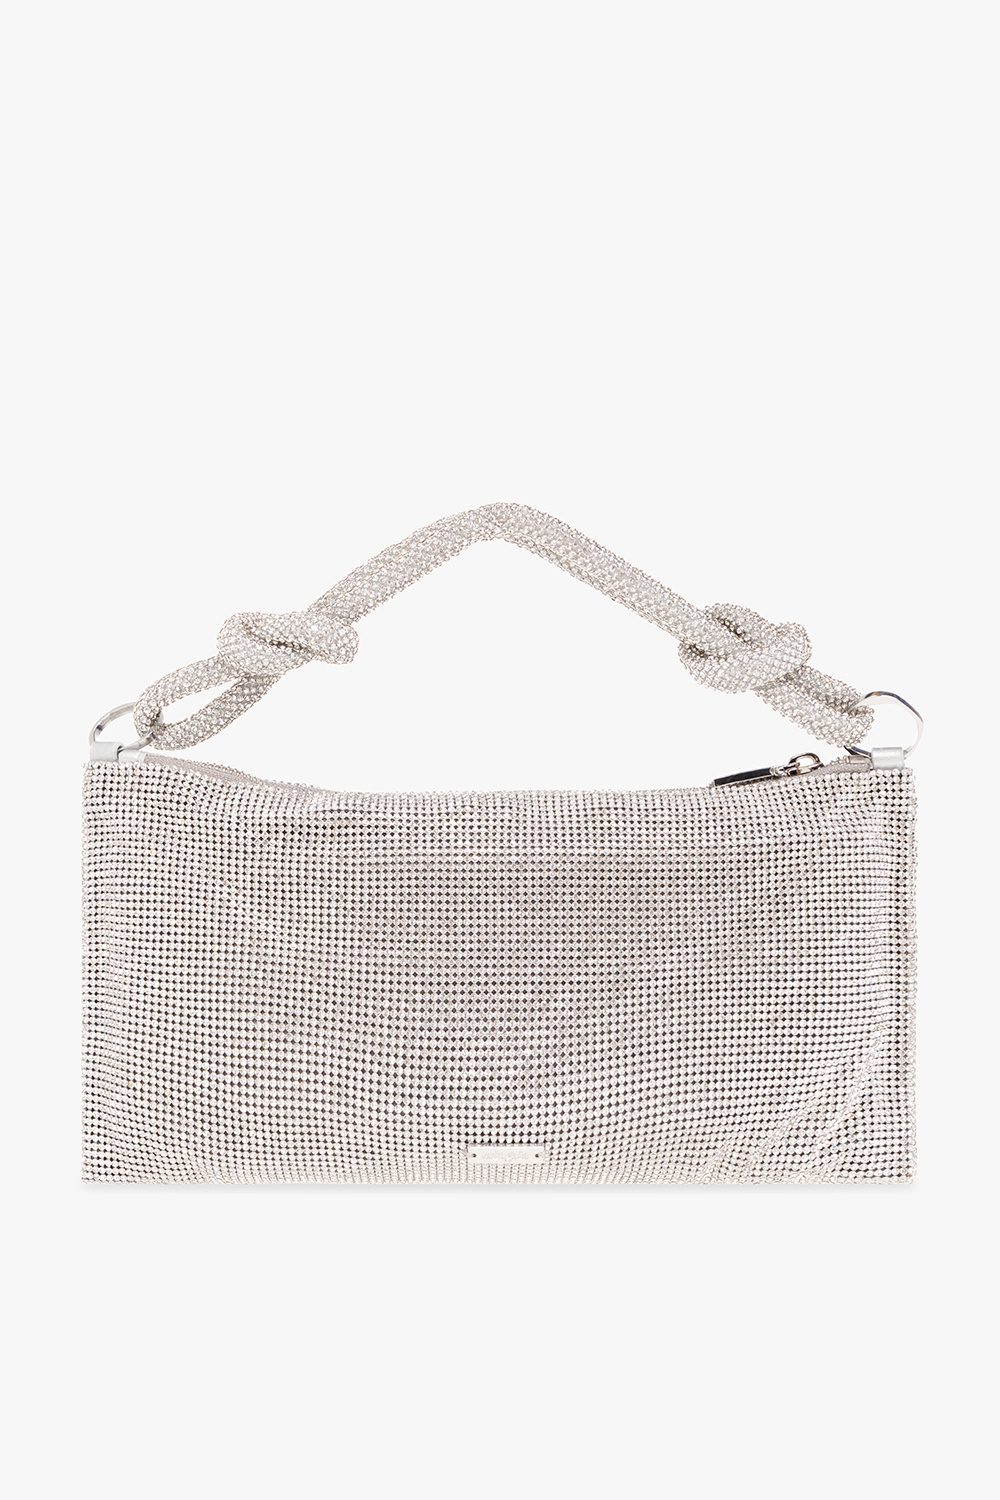 Cult Gaia ‘Hera Nano’ handbag